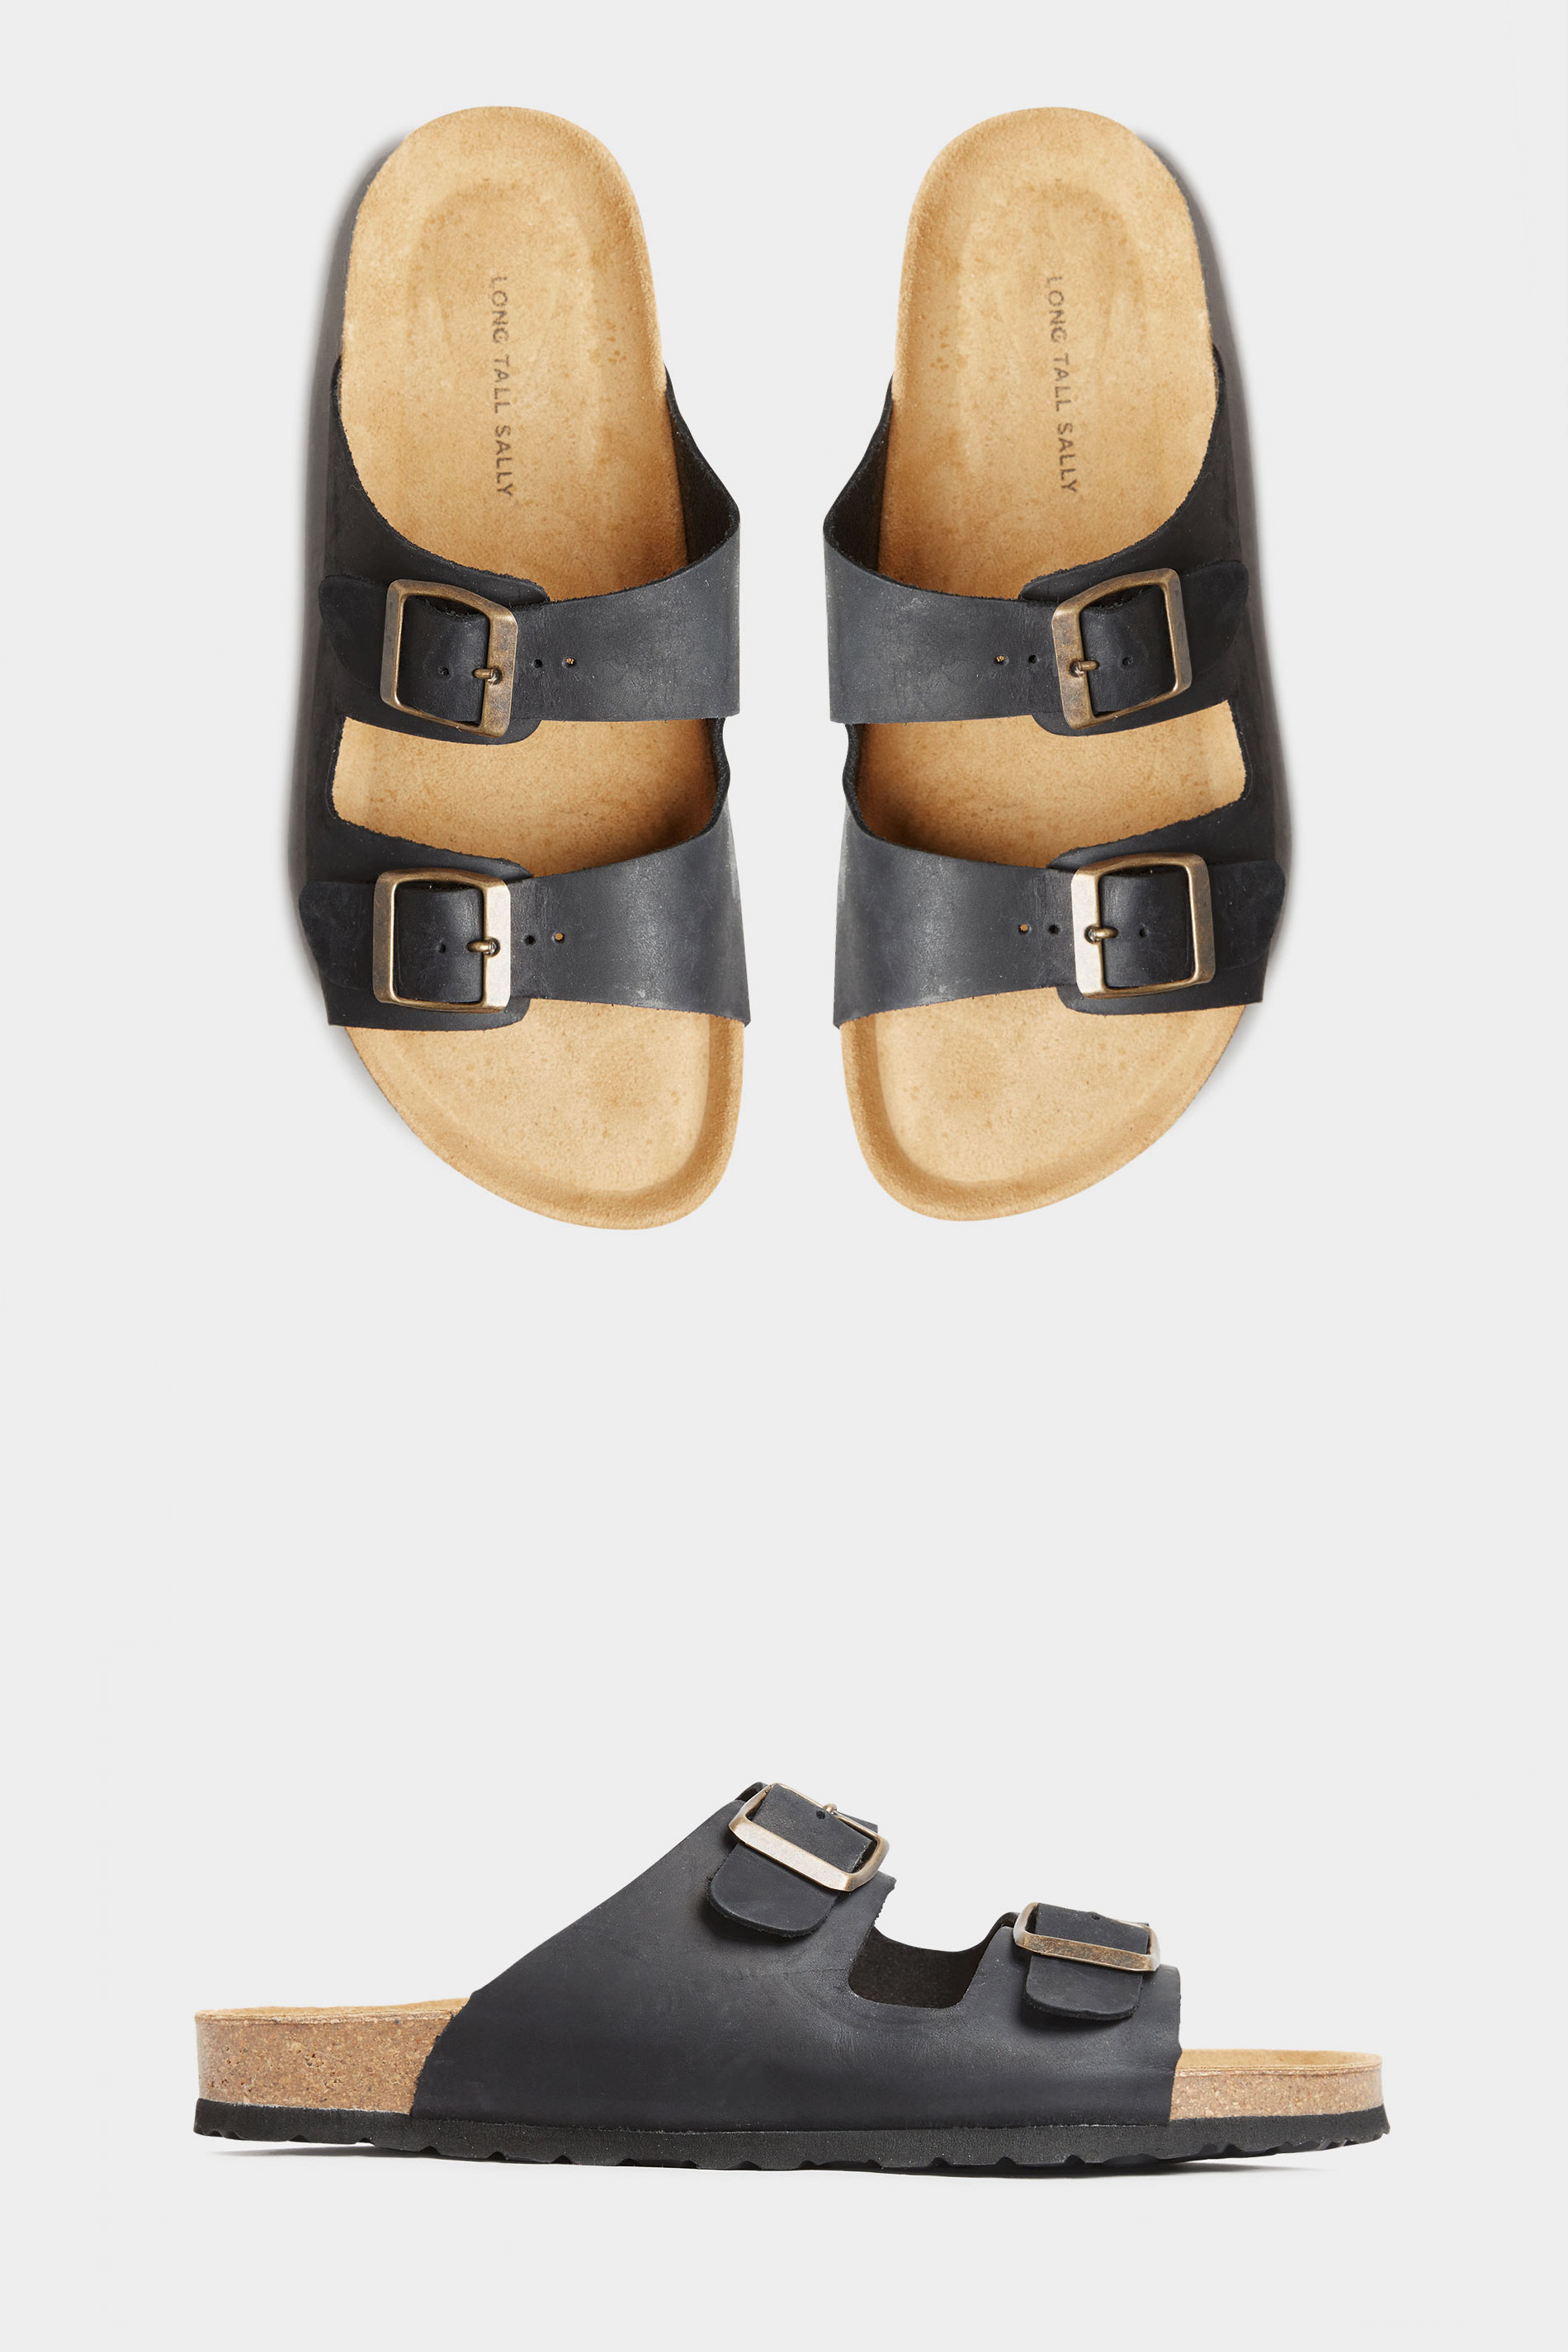 Grande taille  Sandals Grande taille  Flat Sandals | LTS Black Leather Two Buckle Footbed Sandals In Standard D Fit - EL86691